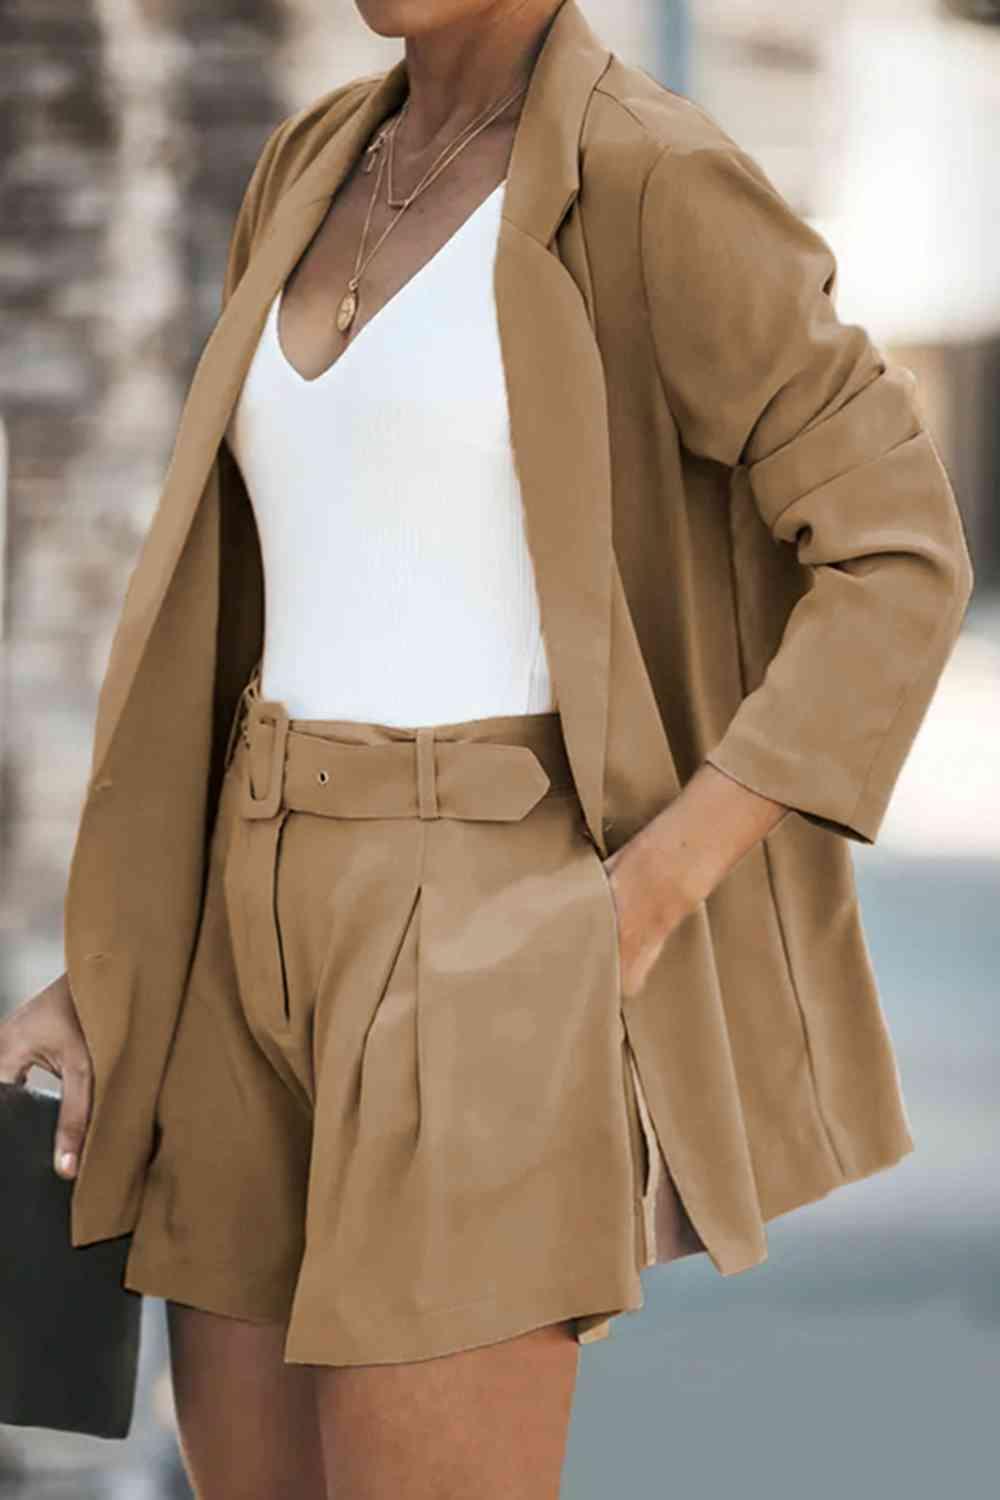 a woman wearing a tan jacket and shorts